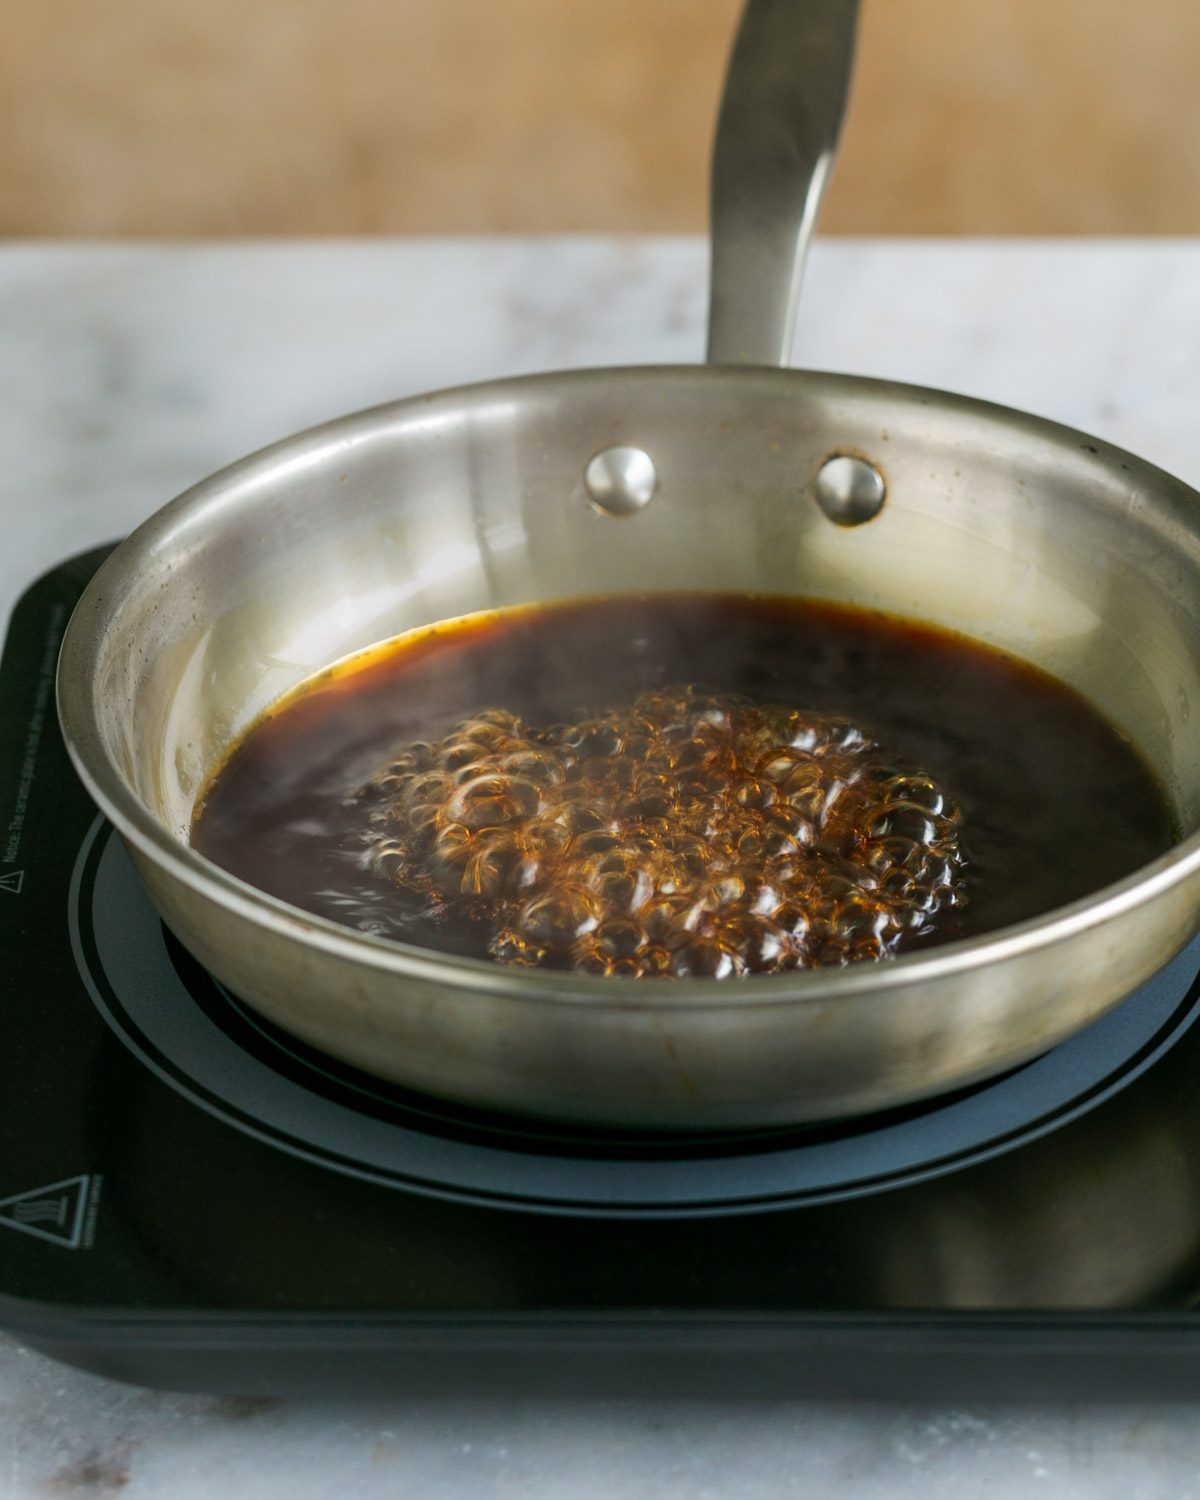 Pickling liquid in pan boiling